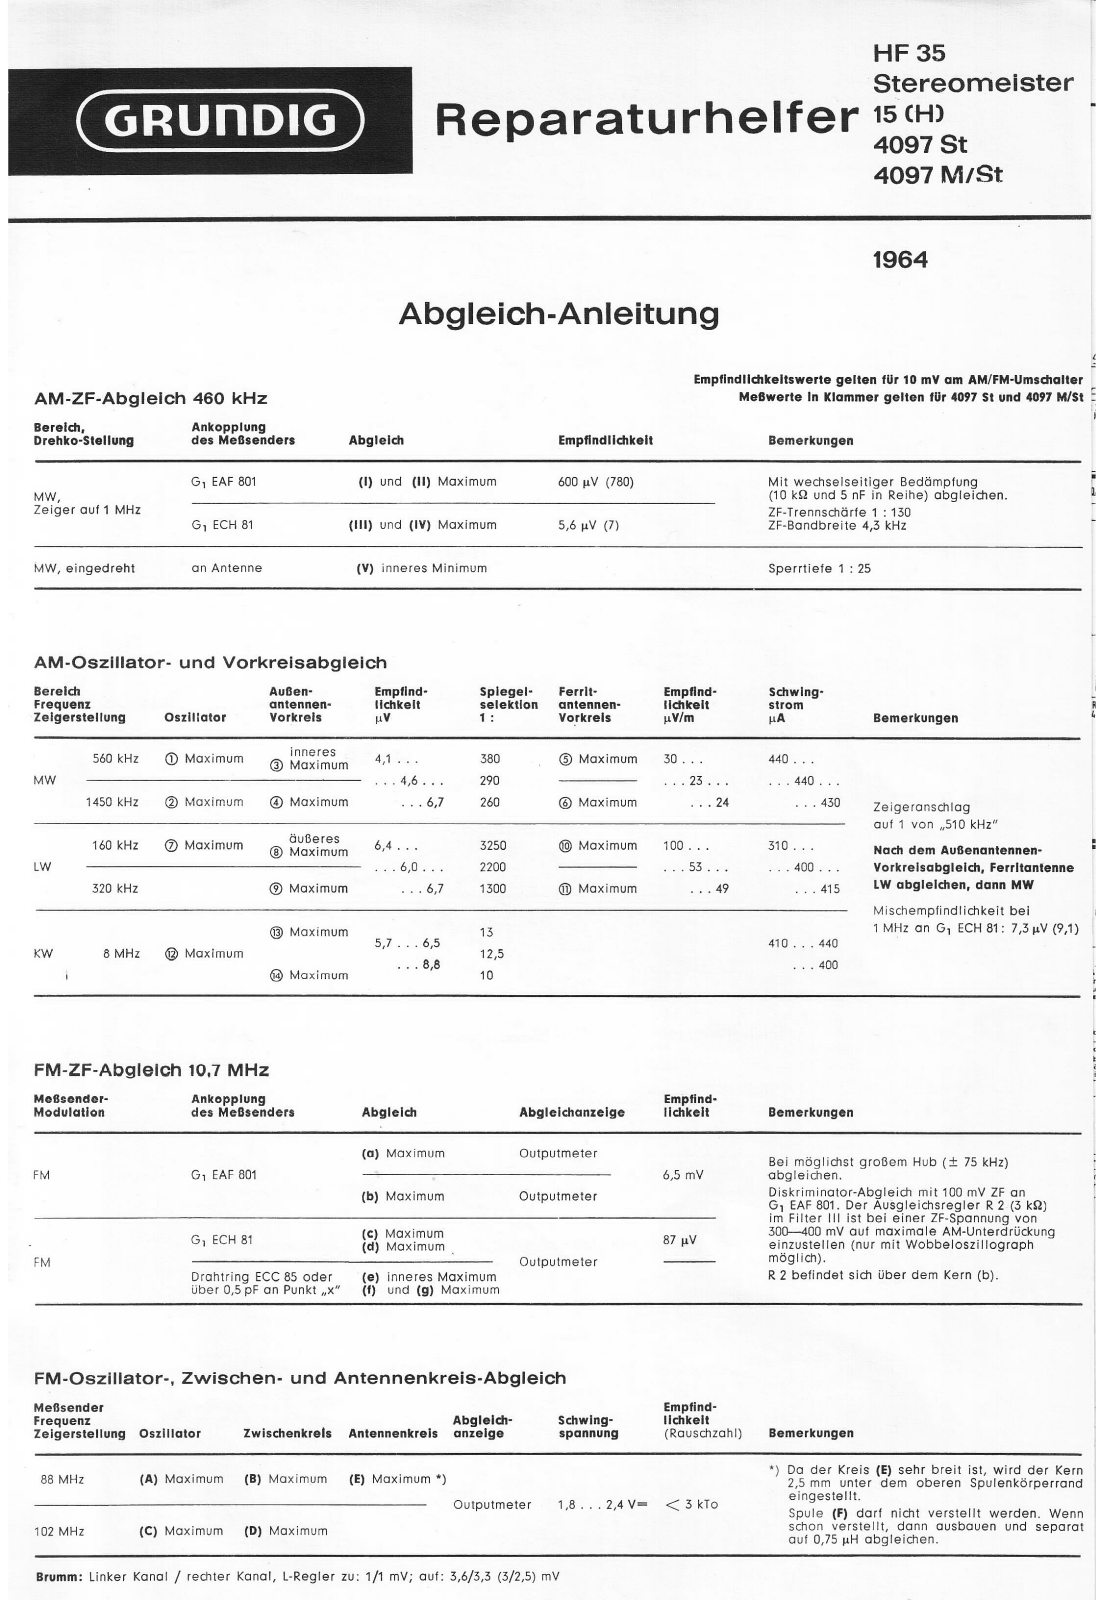 Grundig Stereomeister Service Manual